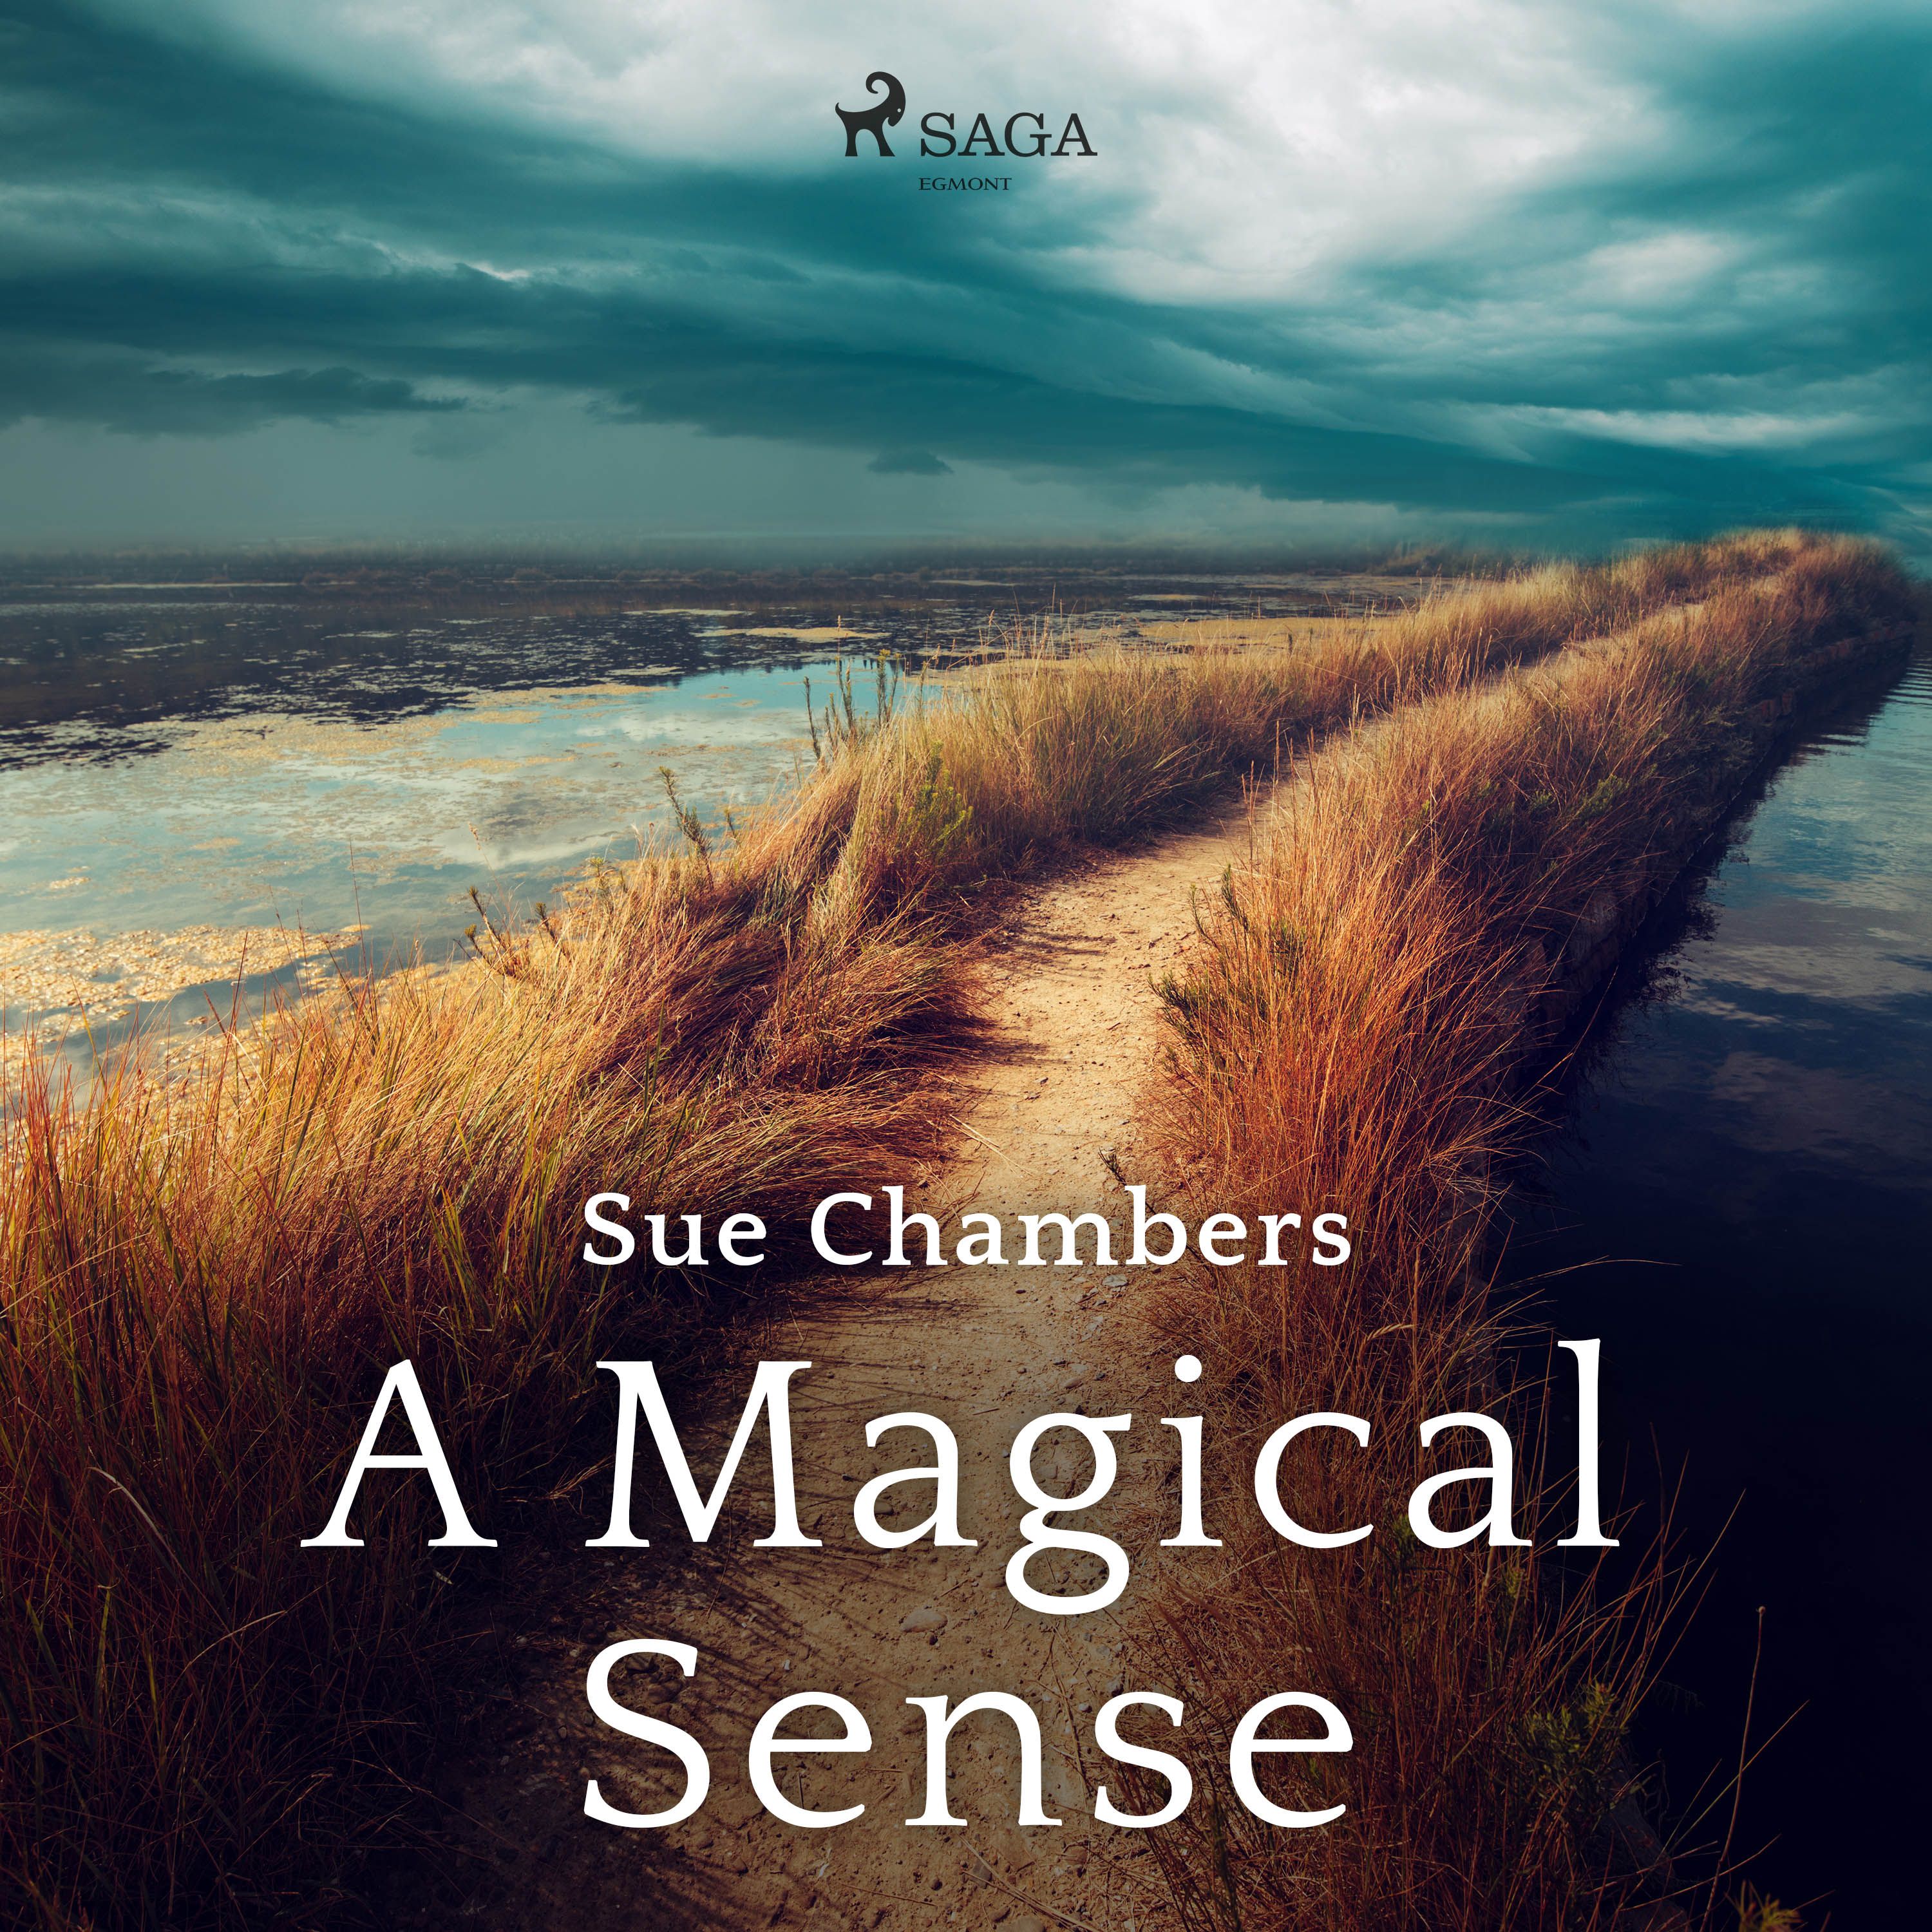 A Magical Sense, lydbog af Sue Chambers